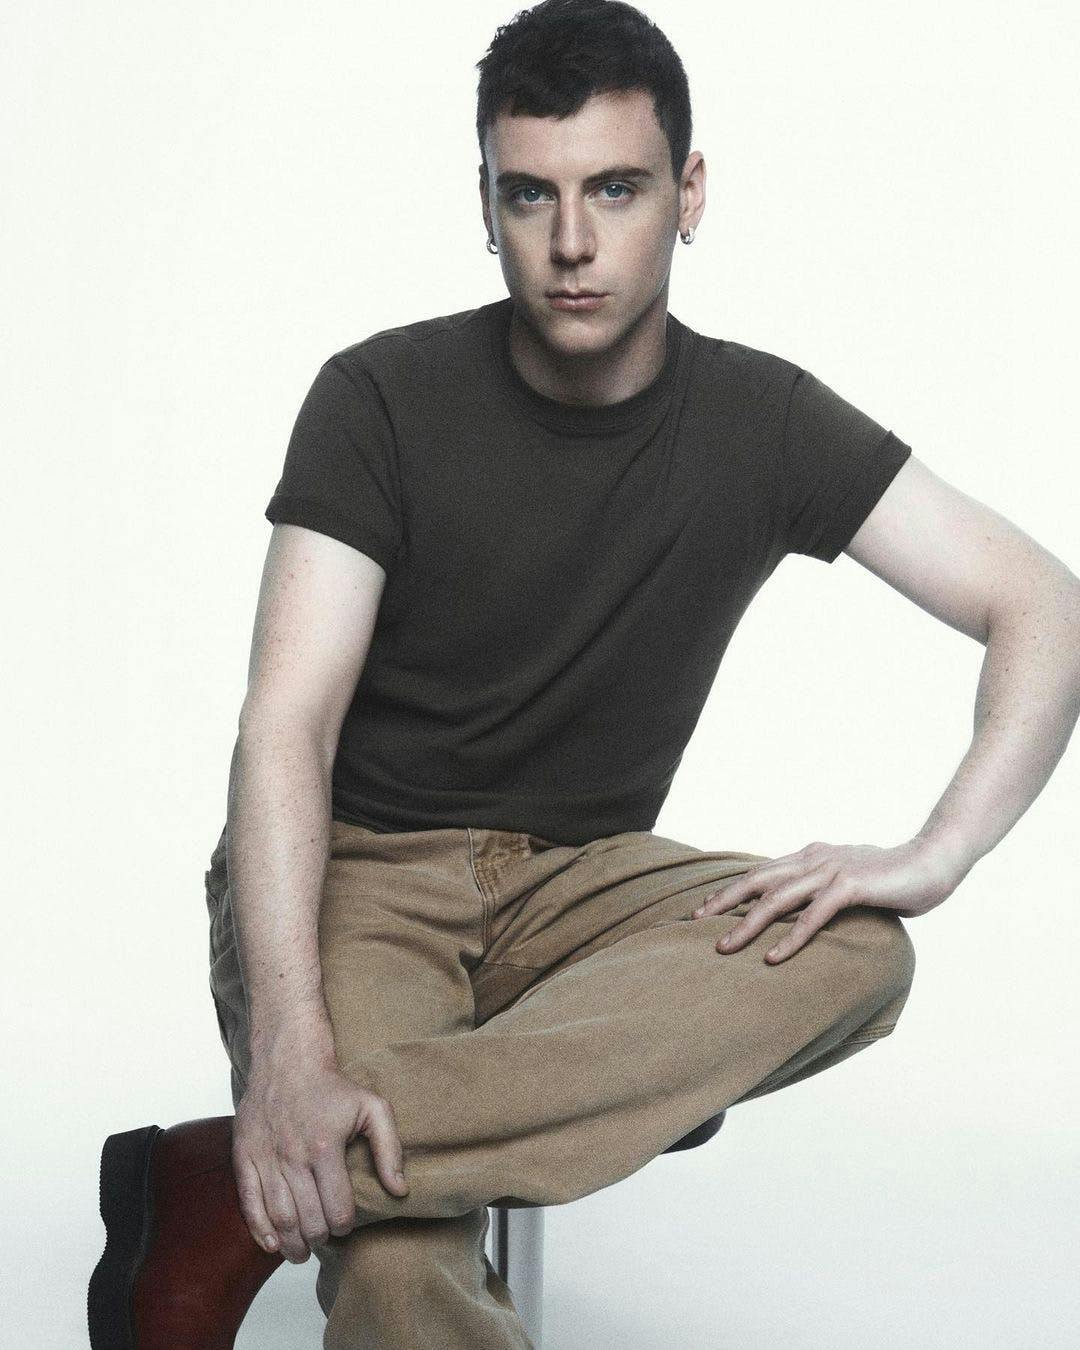 person photography portrait sitting sleeve adult male man pants t-shirt